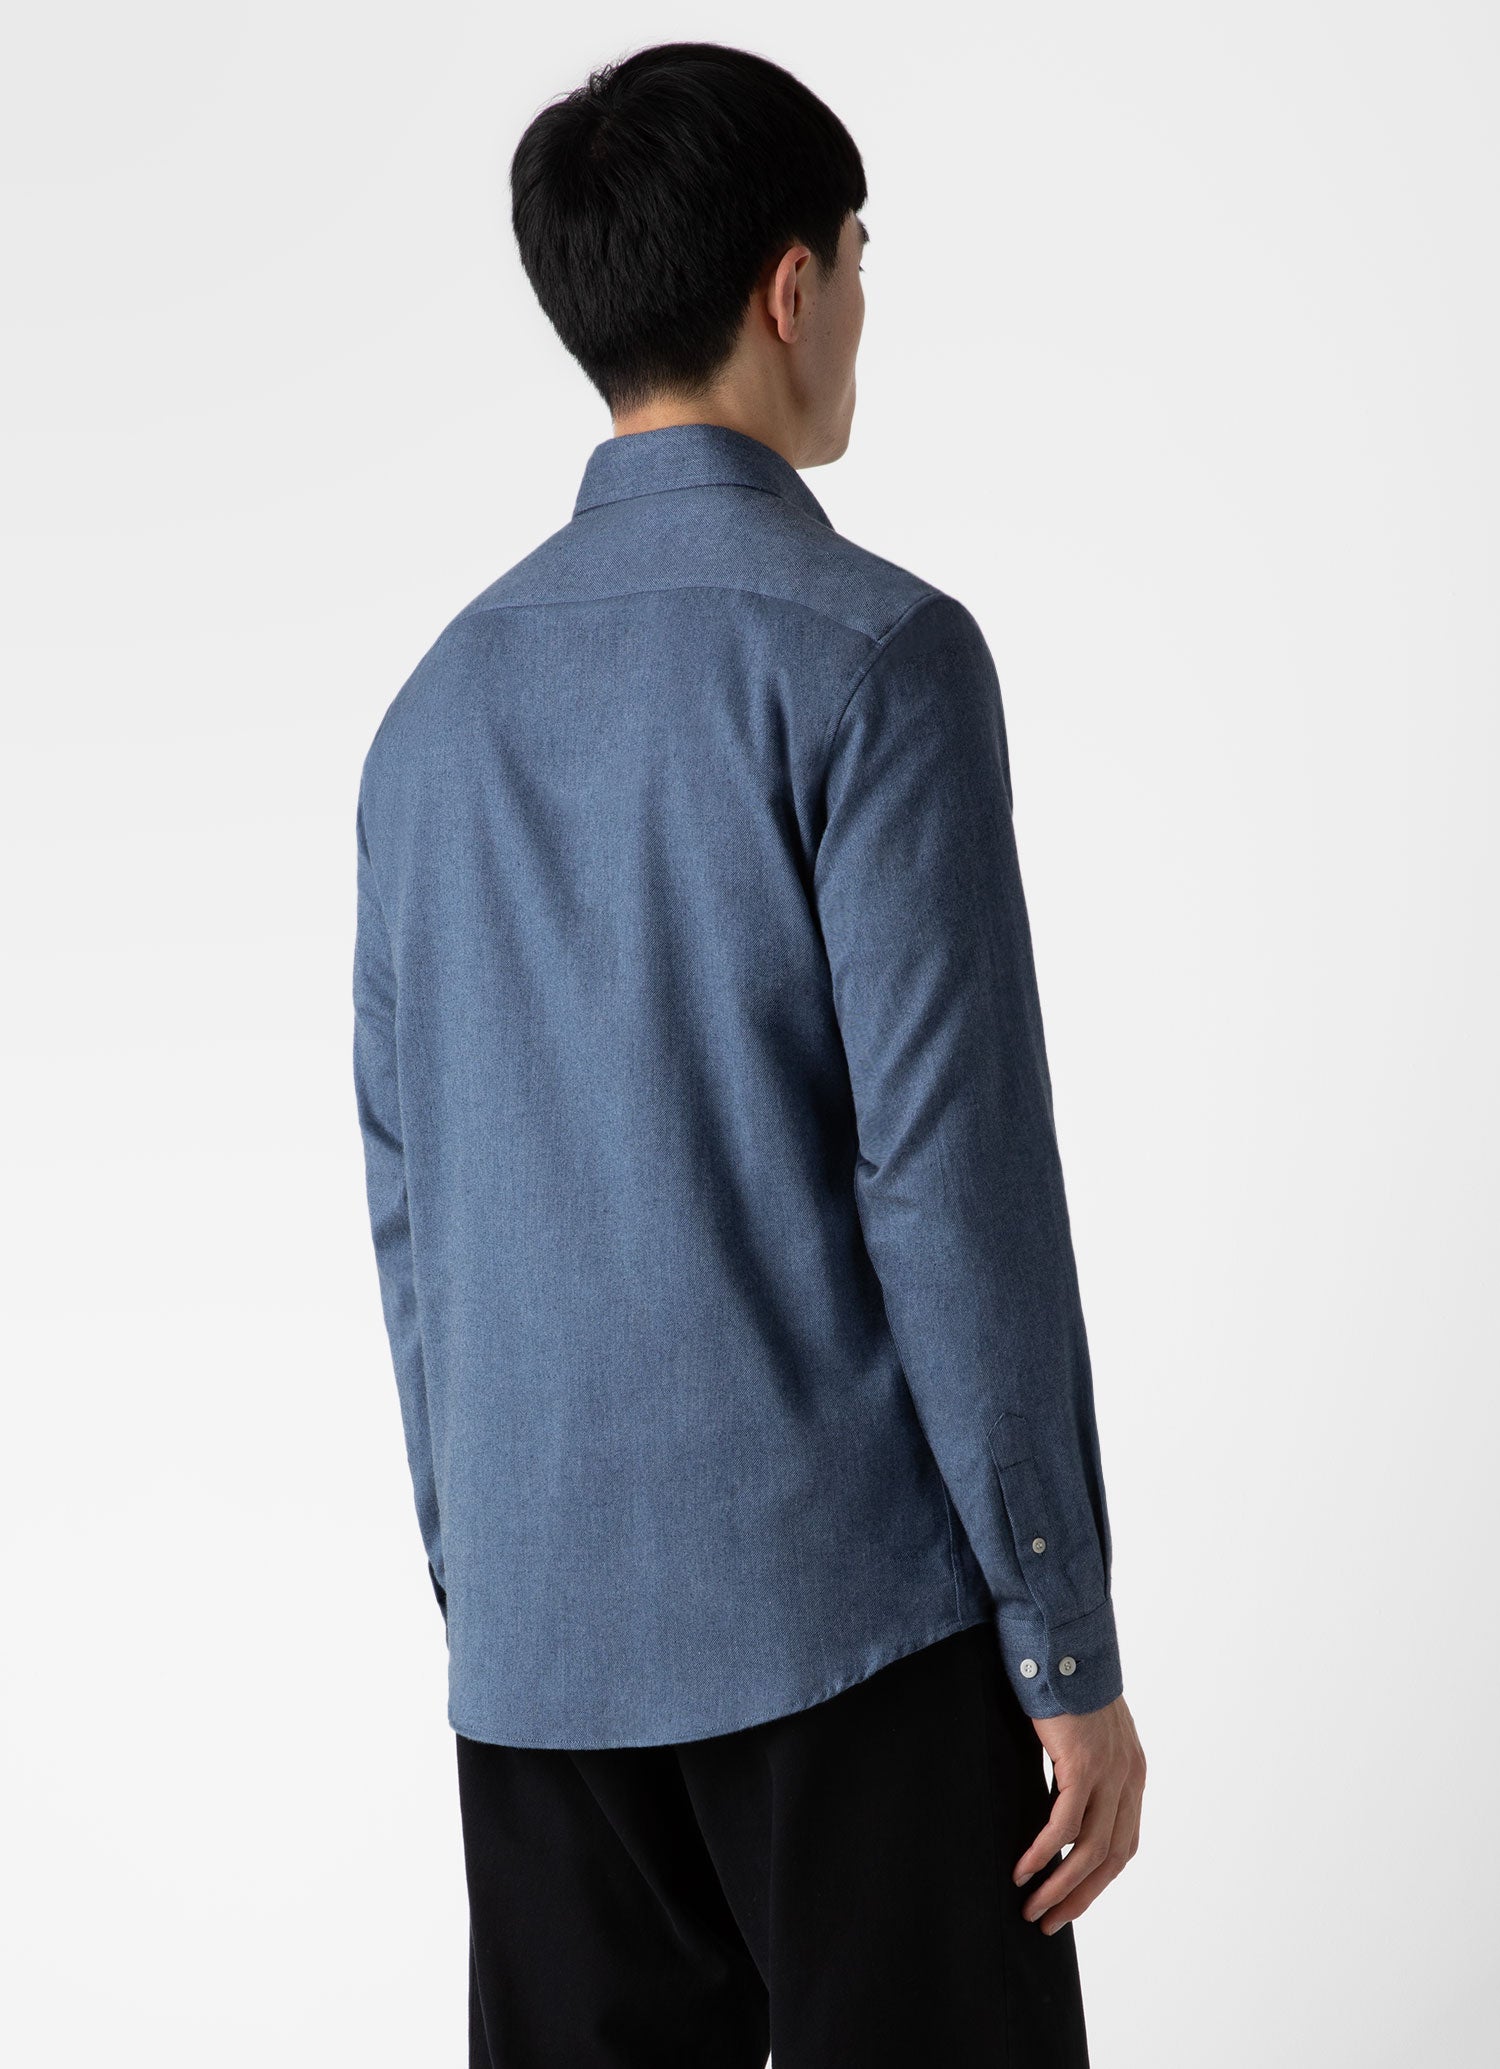 Men's Button Down Flannel Shirt in Blue Melange